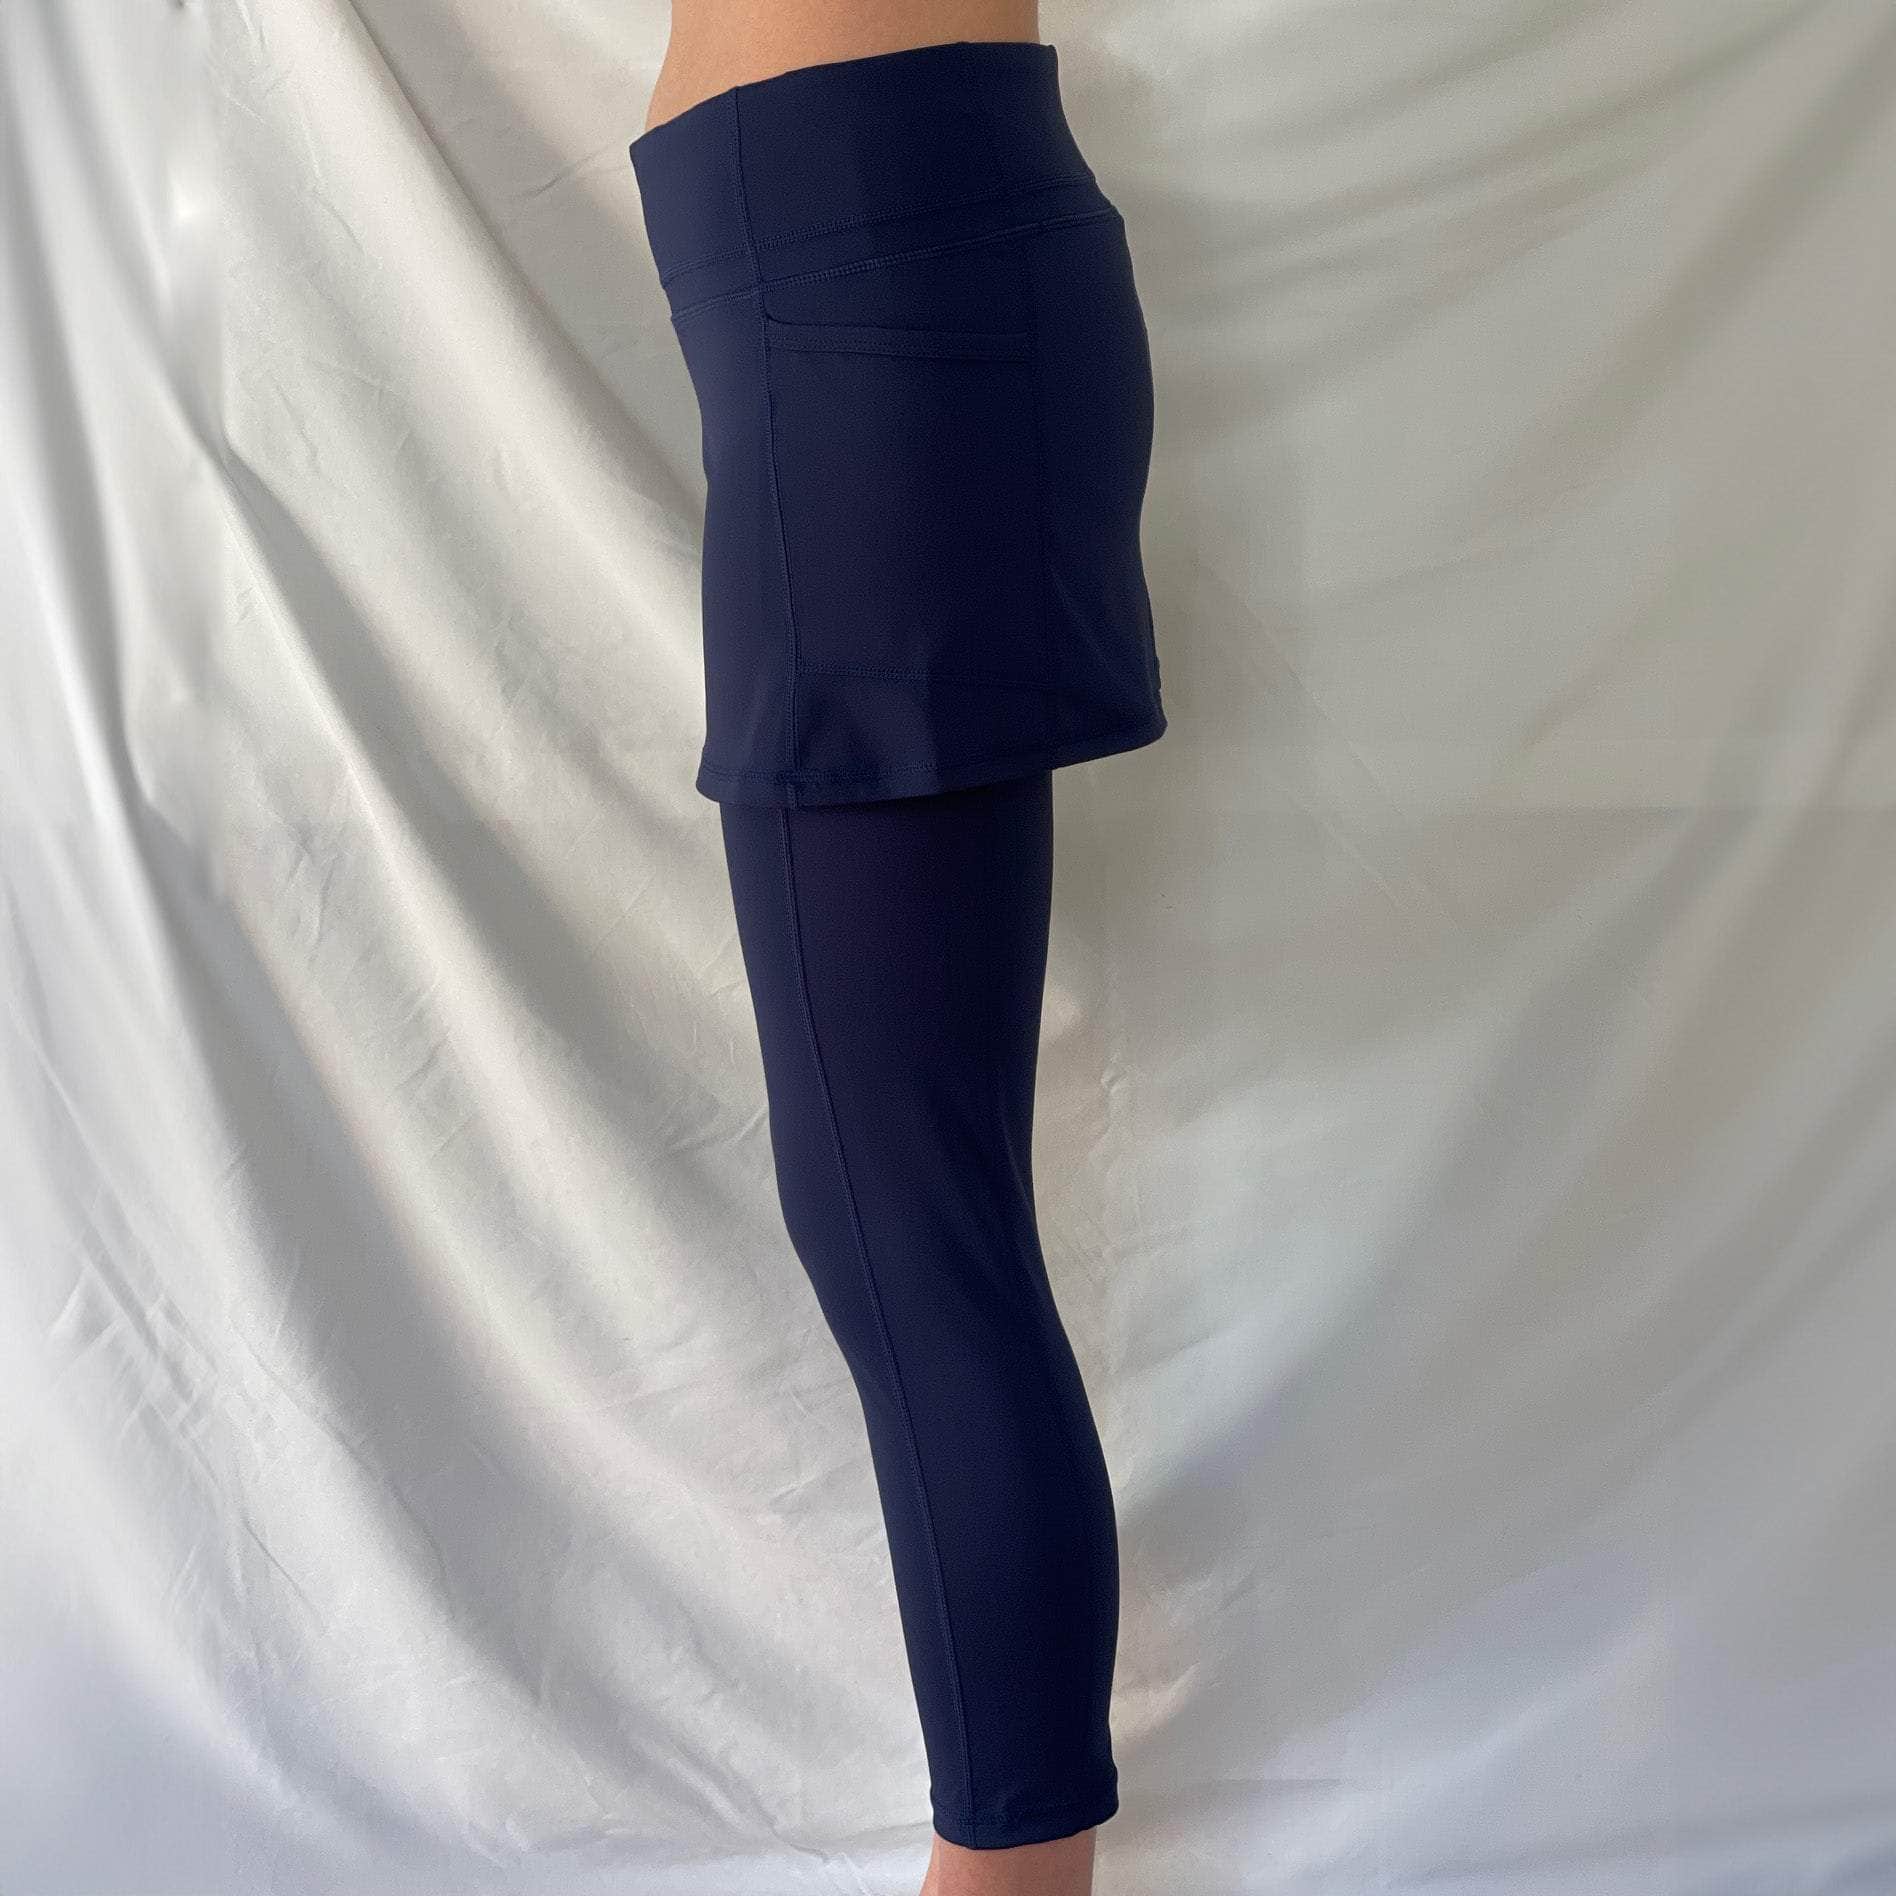 Classic Sol Skort - Black Skirt with Leggings – Sol Sister Sport